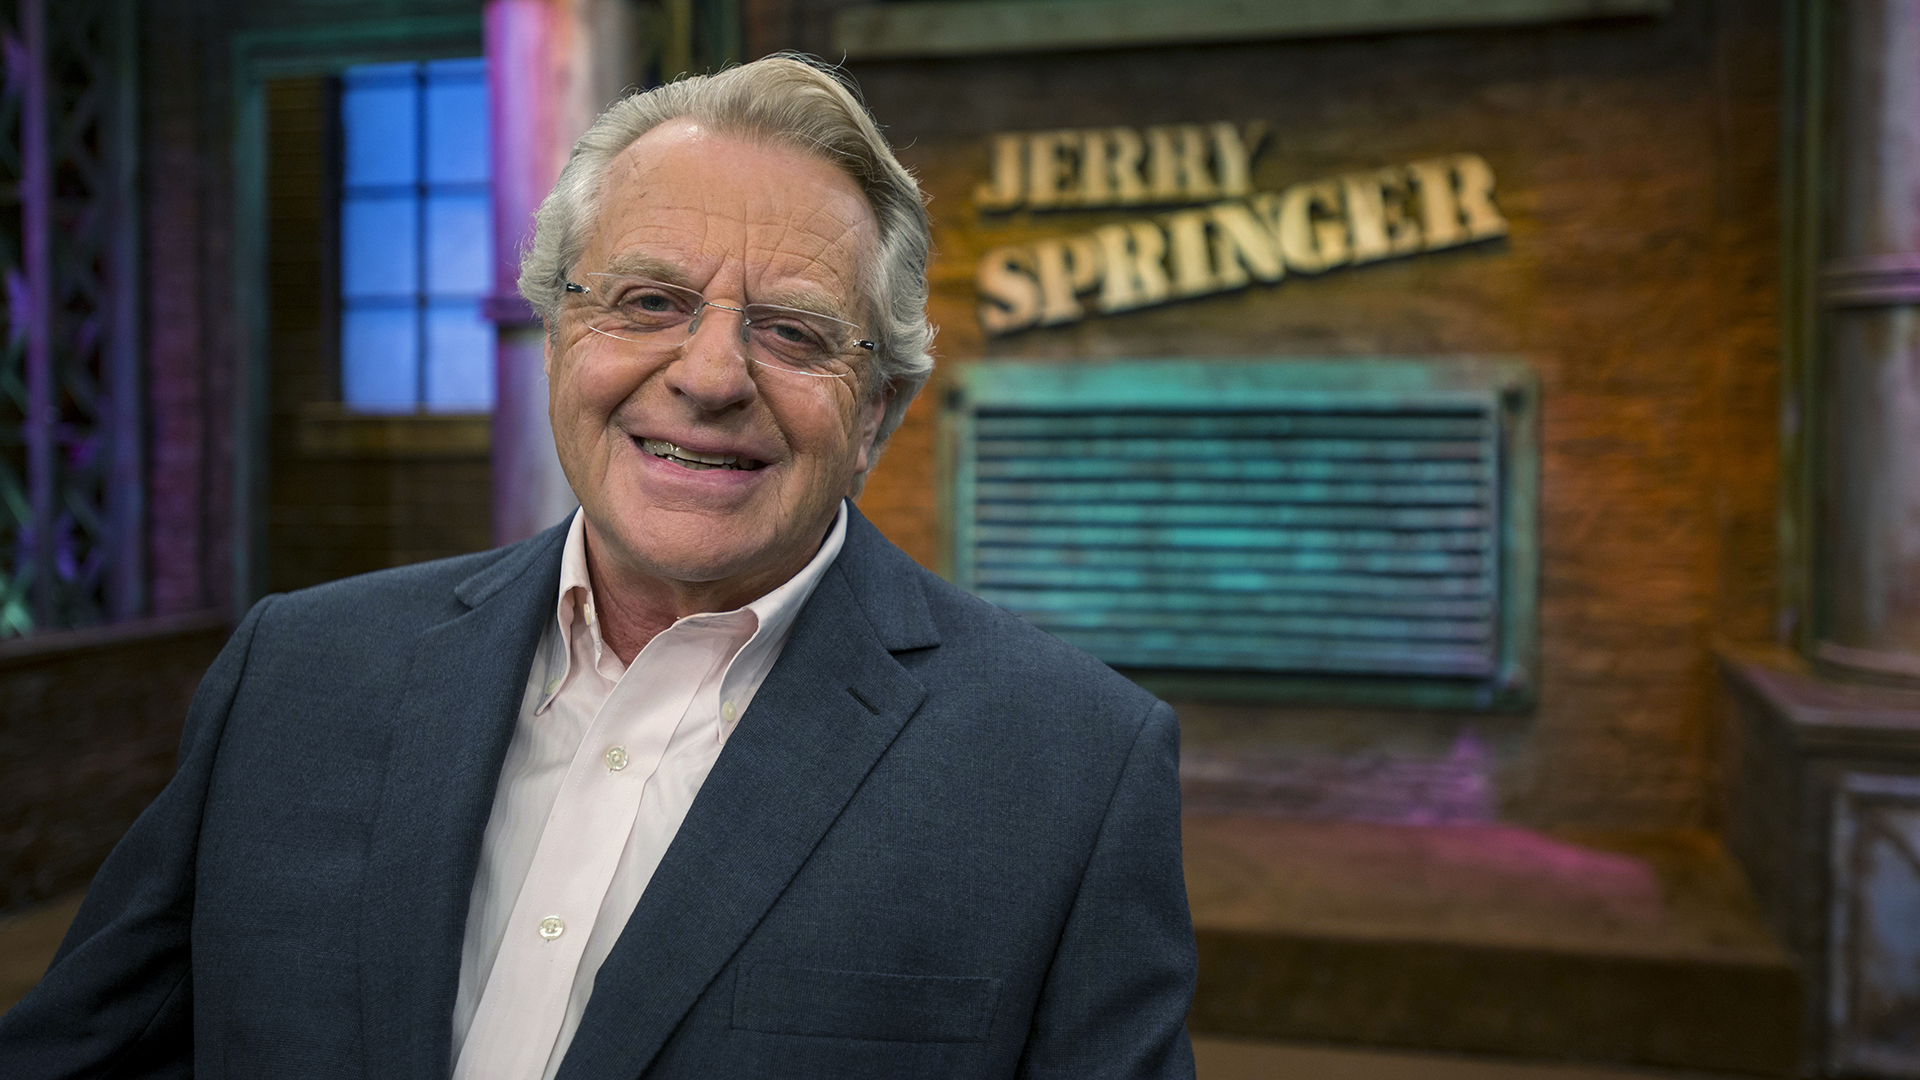 Jerry springer season 28 episode 39